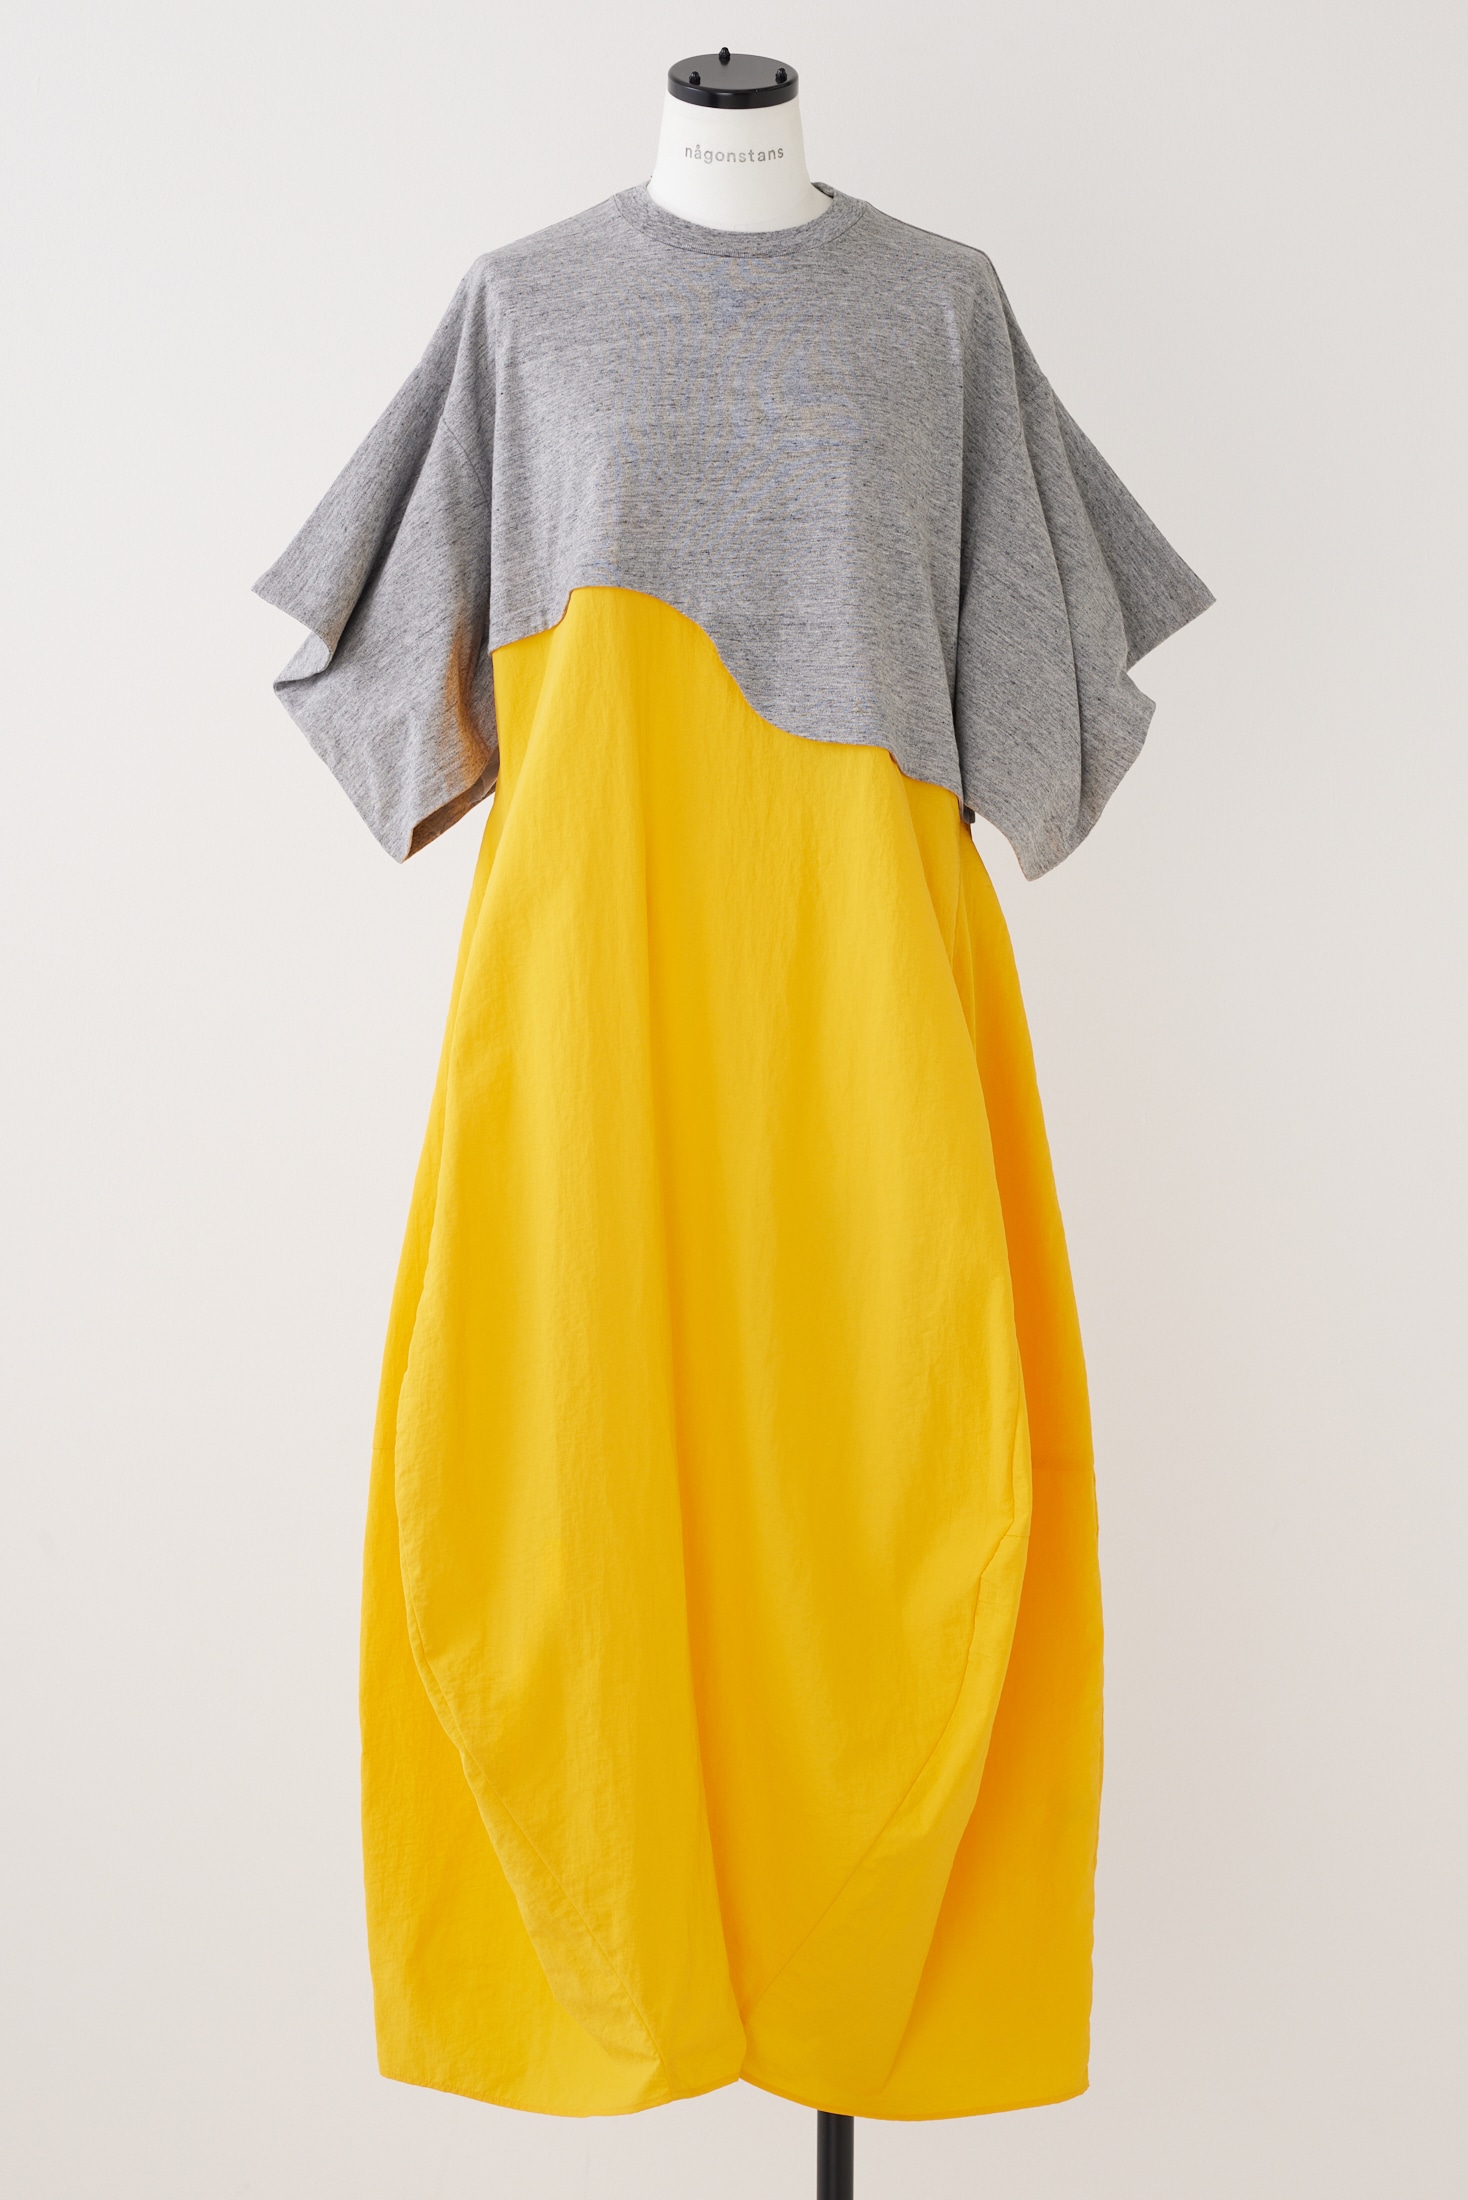 layered-like square-sleeves dress